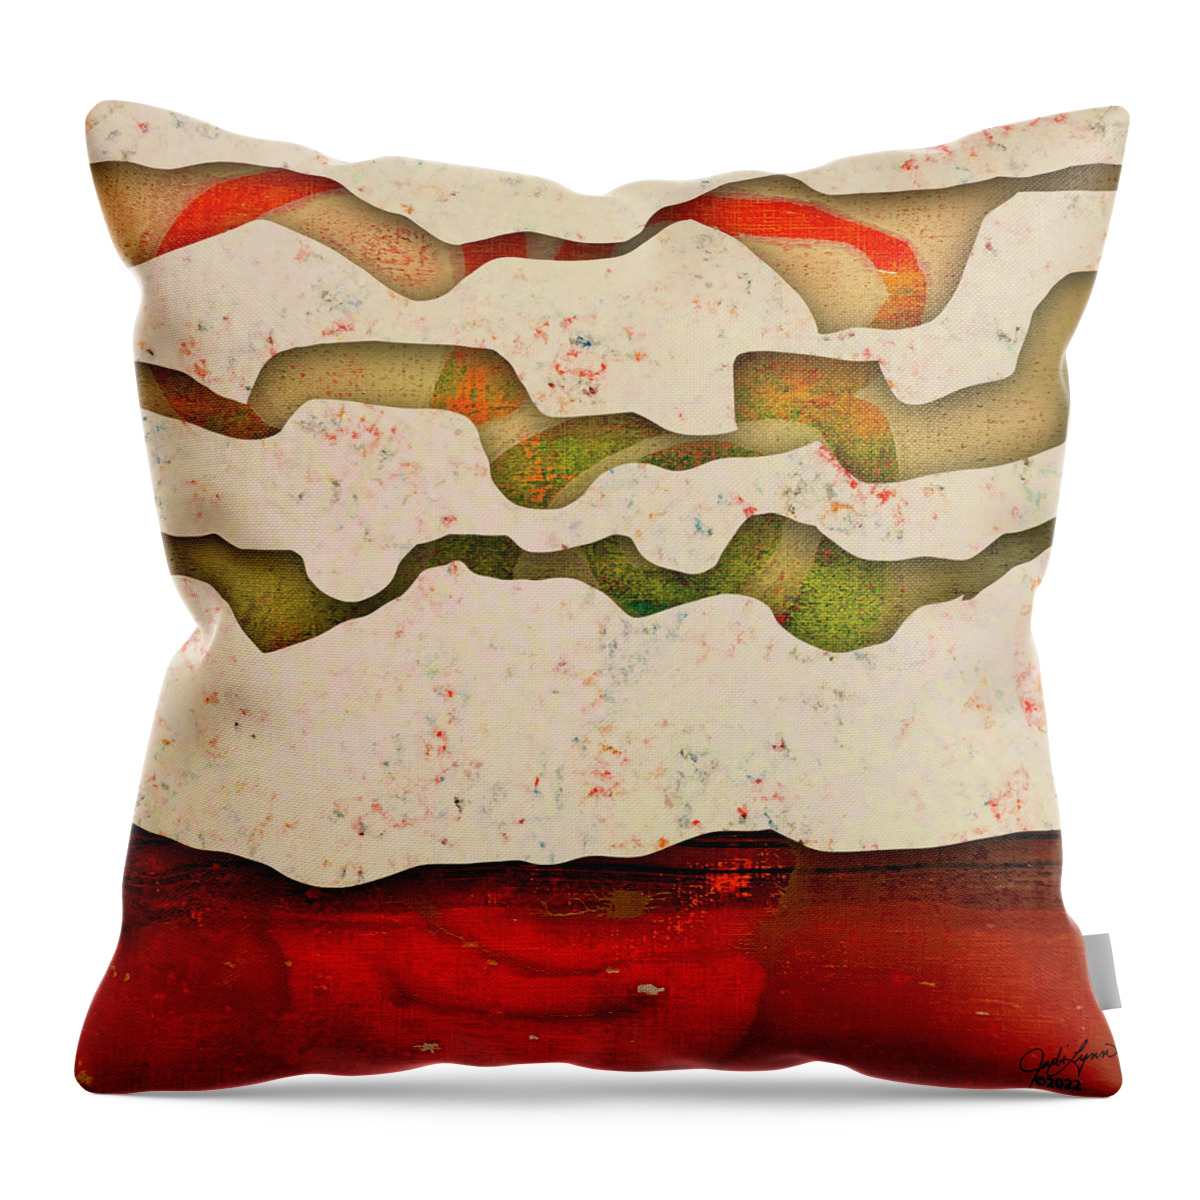 Digital Collage Throw Pillow featuring the digital art Summer Sky by Judi Lynn